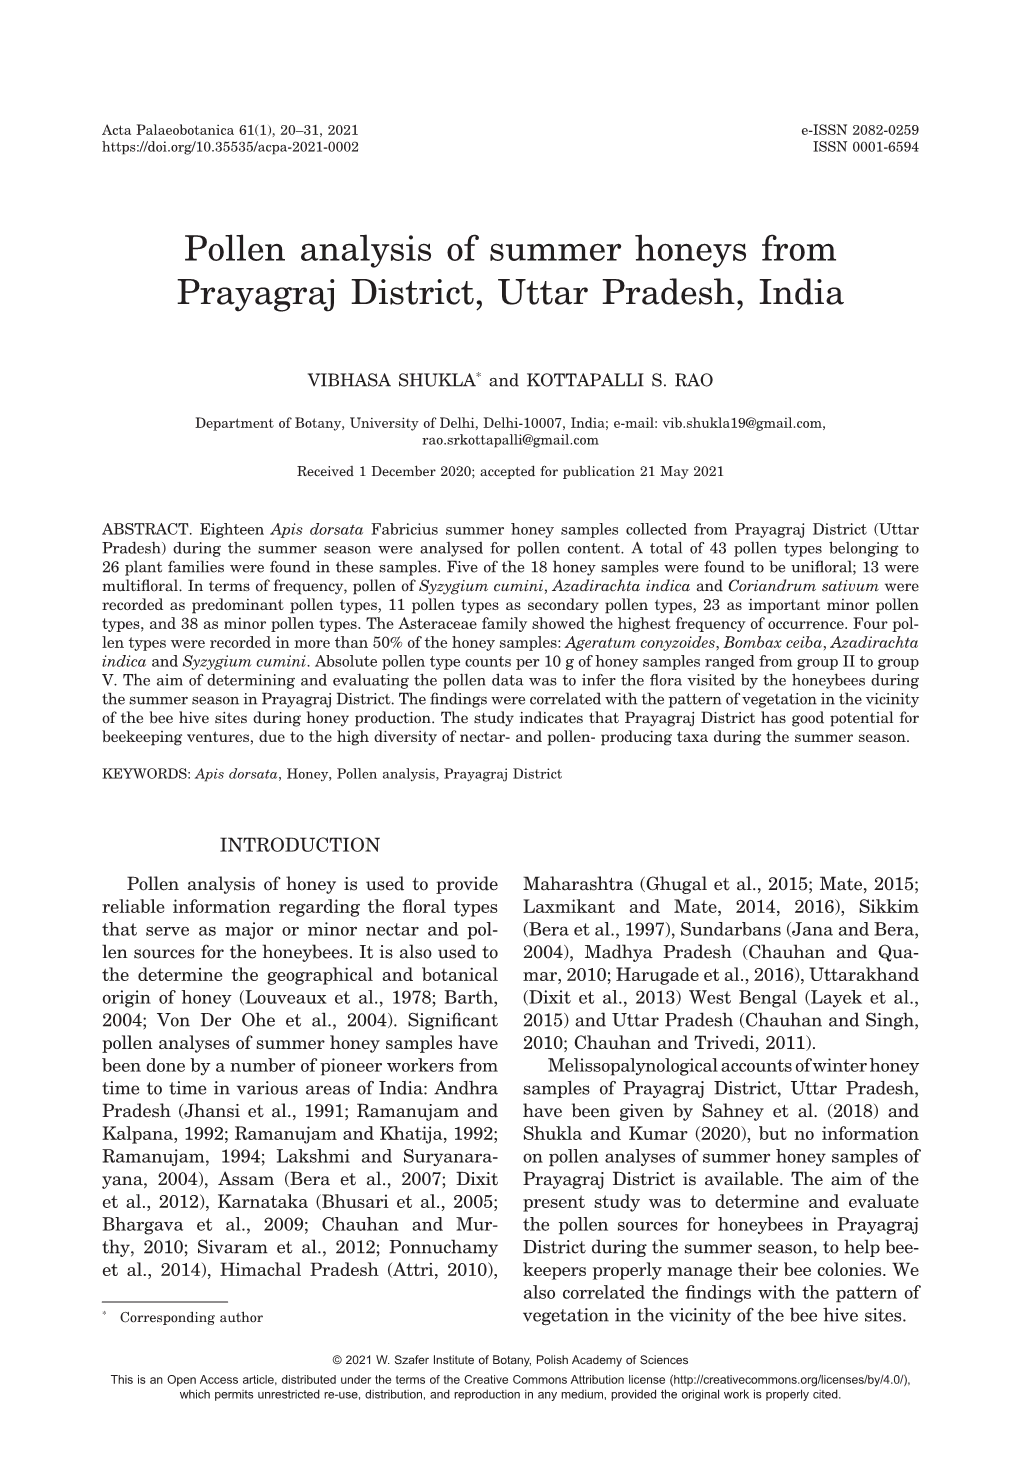 Pollen Analysis of Summer Honeys from Prayagraj District, Uttar Pradesh, India